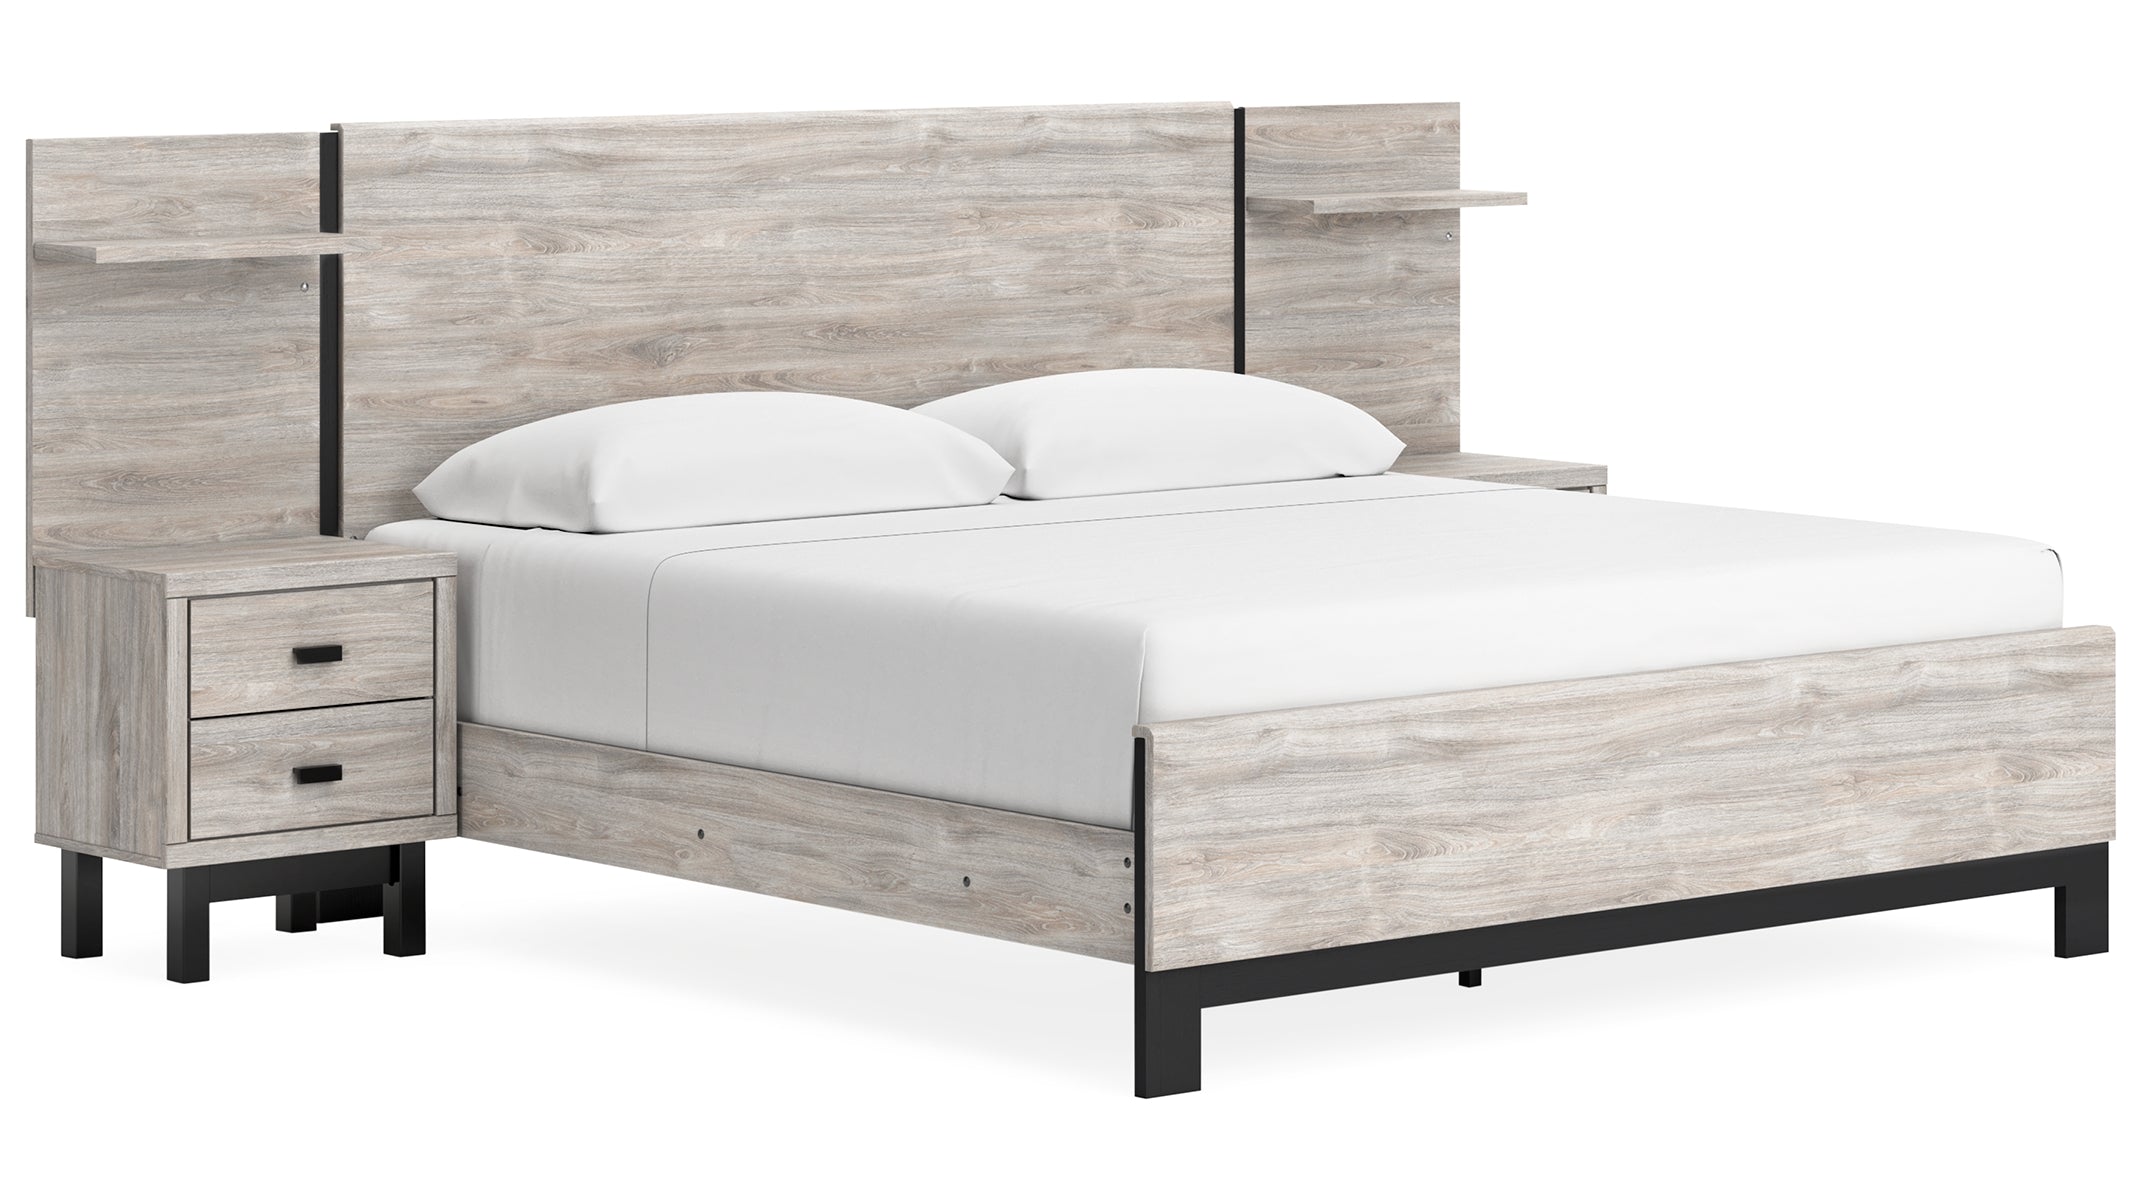 Vessalli King Panel Bed with Dresser